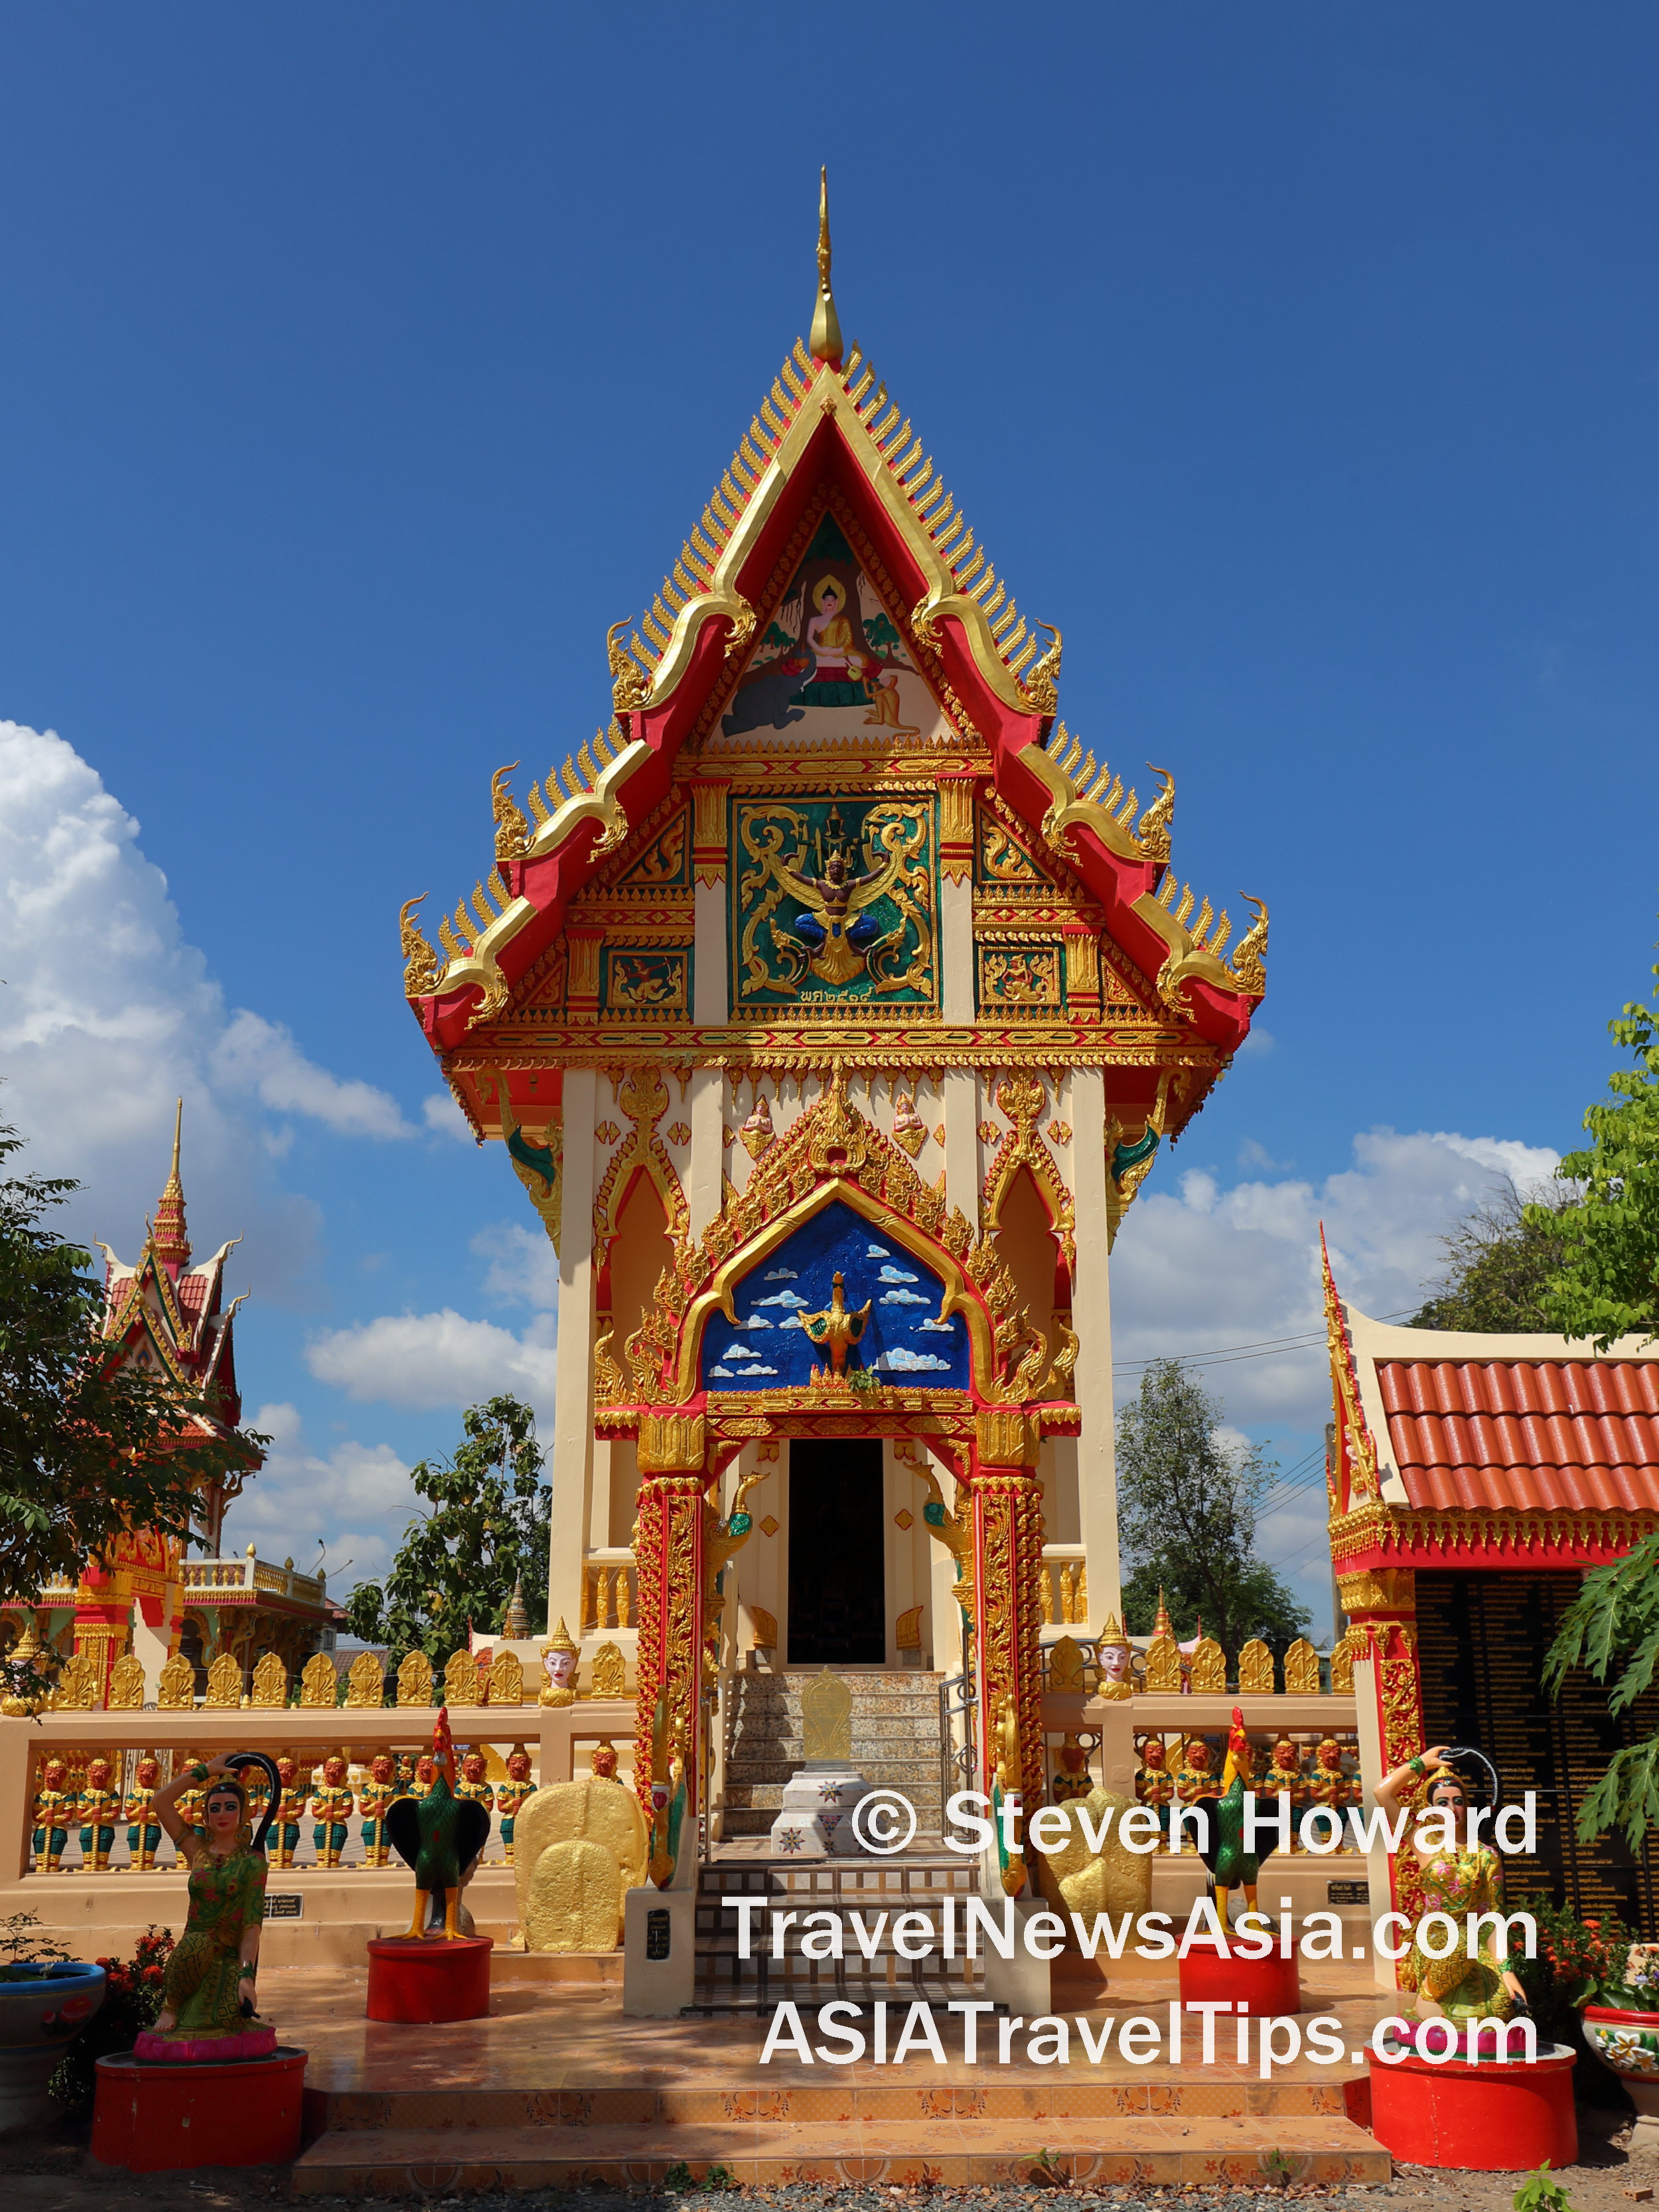 Pictures from Sisaket (ศรีสะเกษ), Thailand